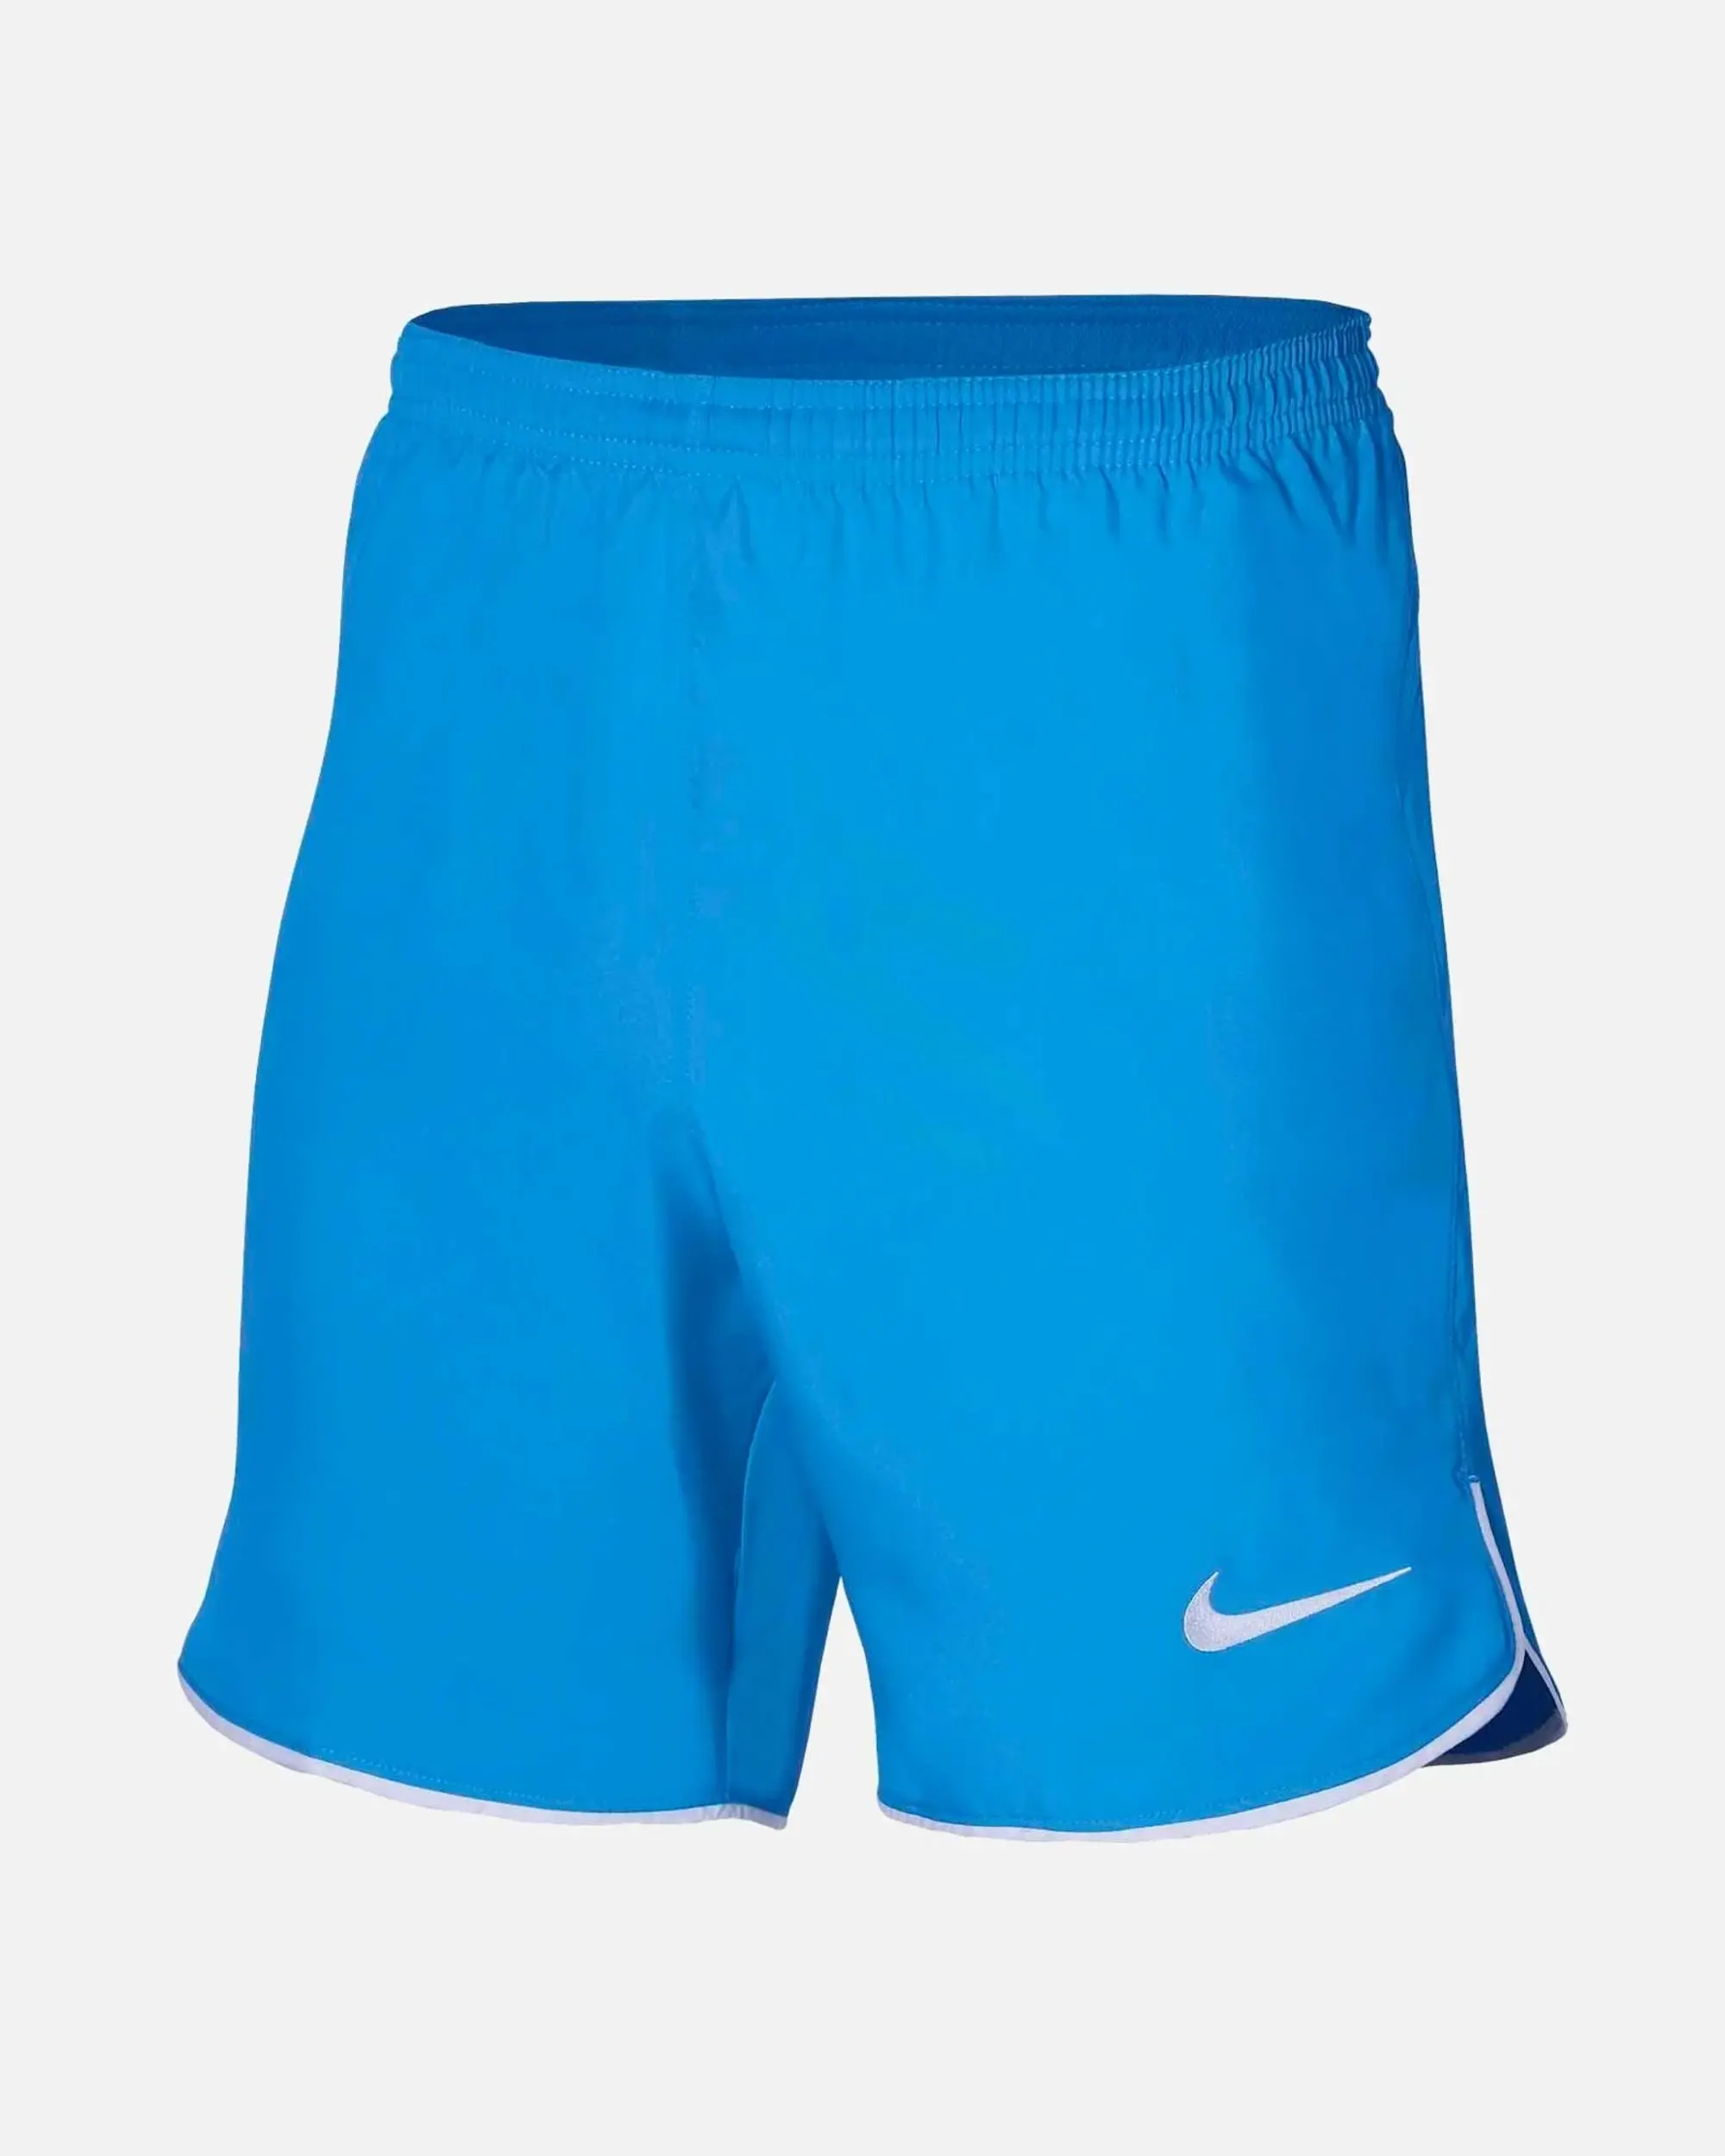 Nike Dri Fit Laser V Shorts